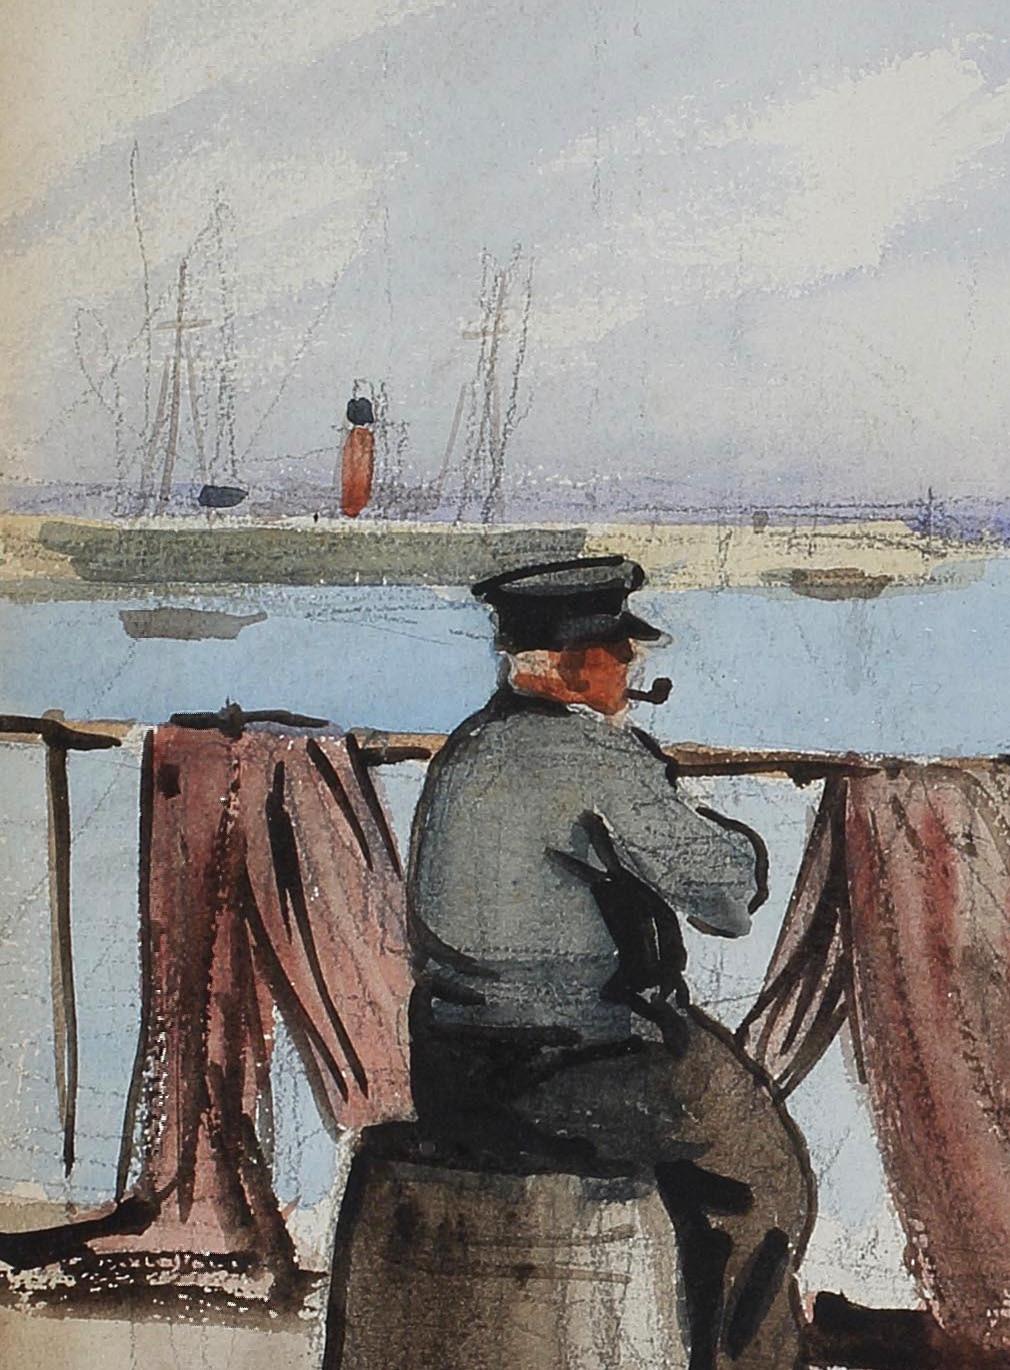 English Henry George Gawthorn Fishermen Newlyn Cornwall Great Western Railway watercolor For Sale